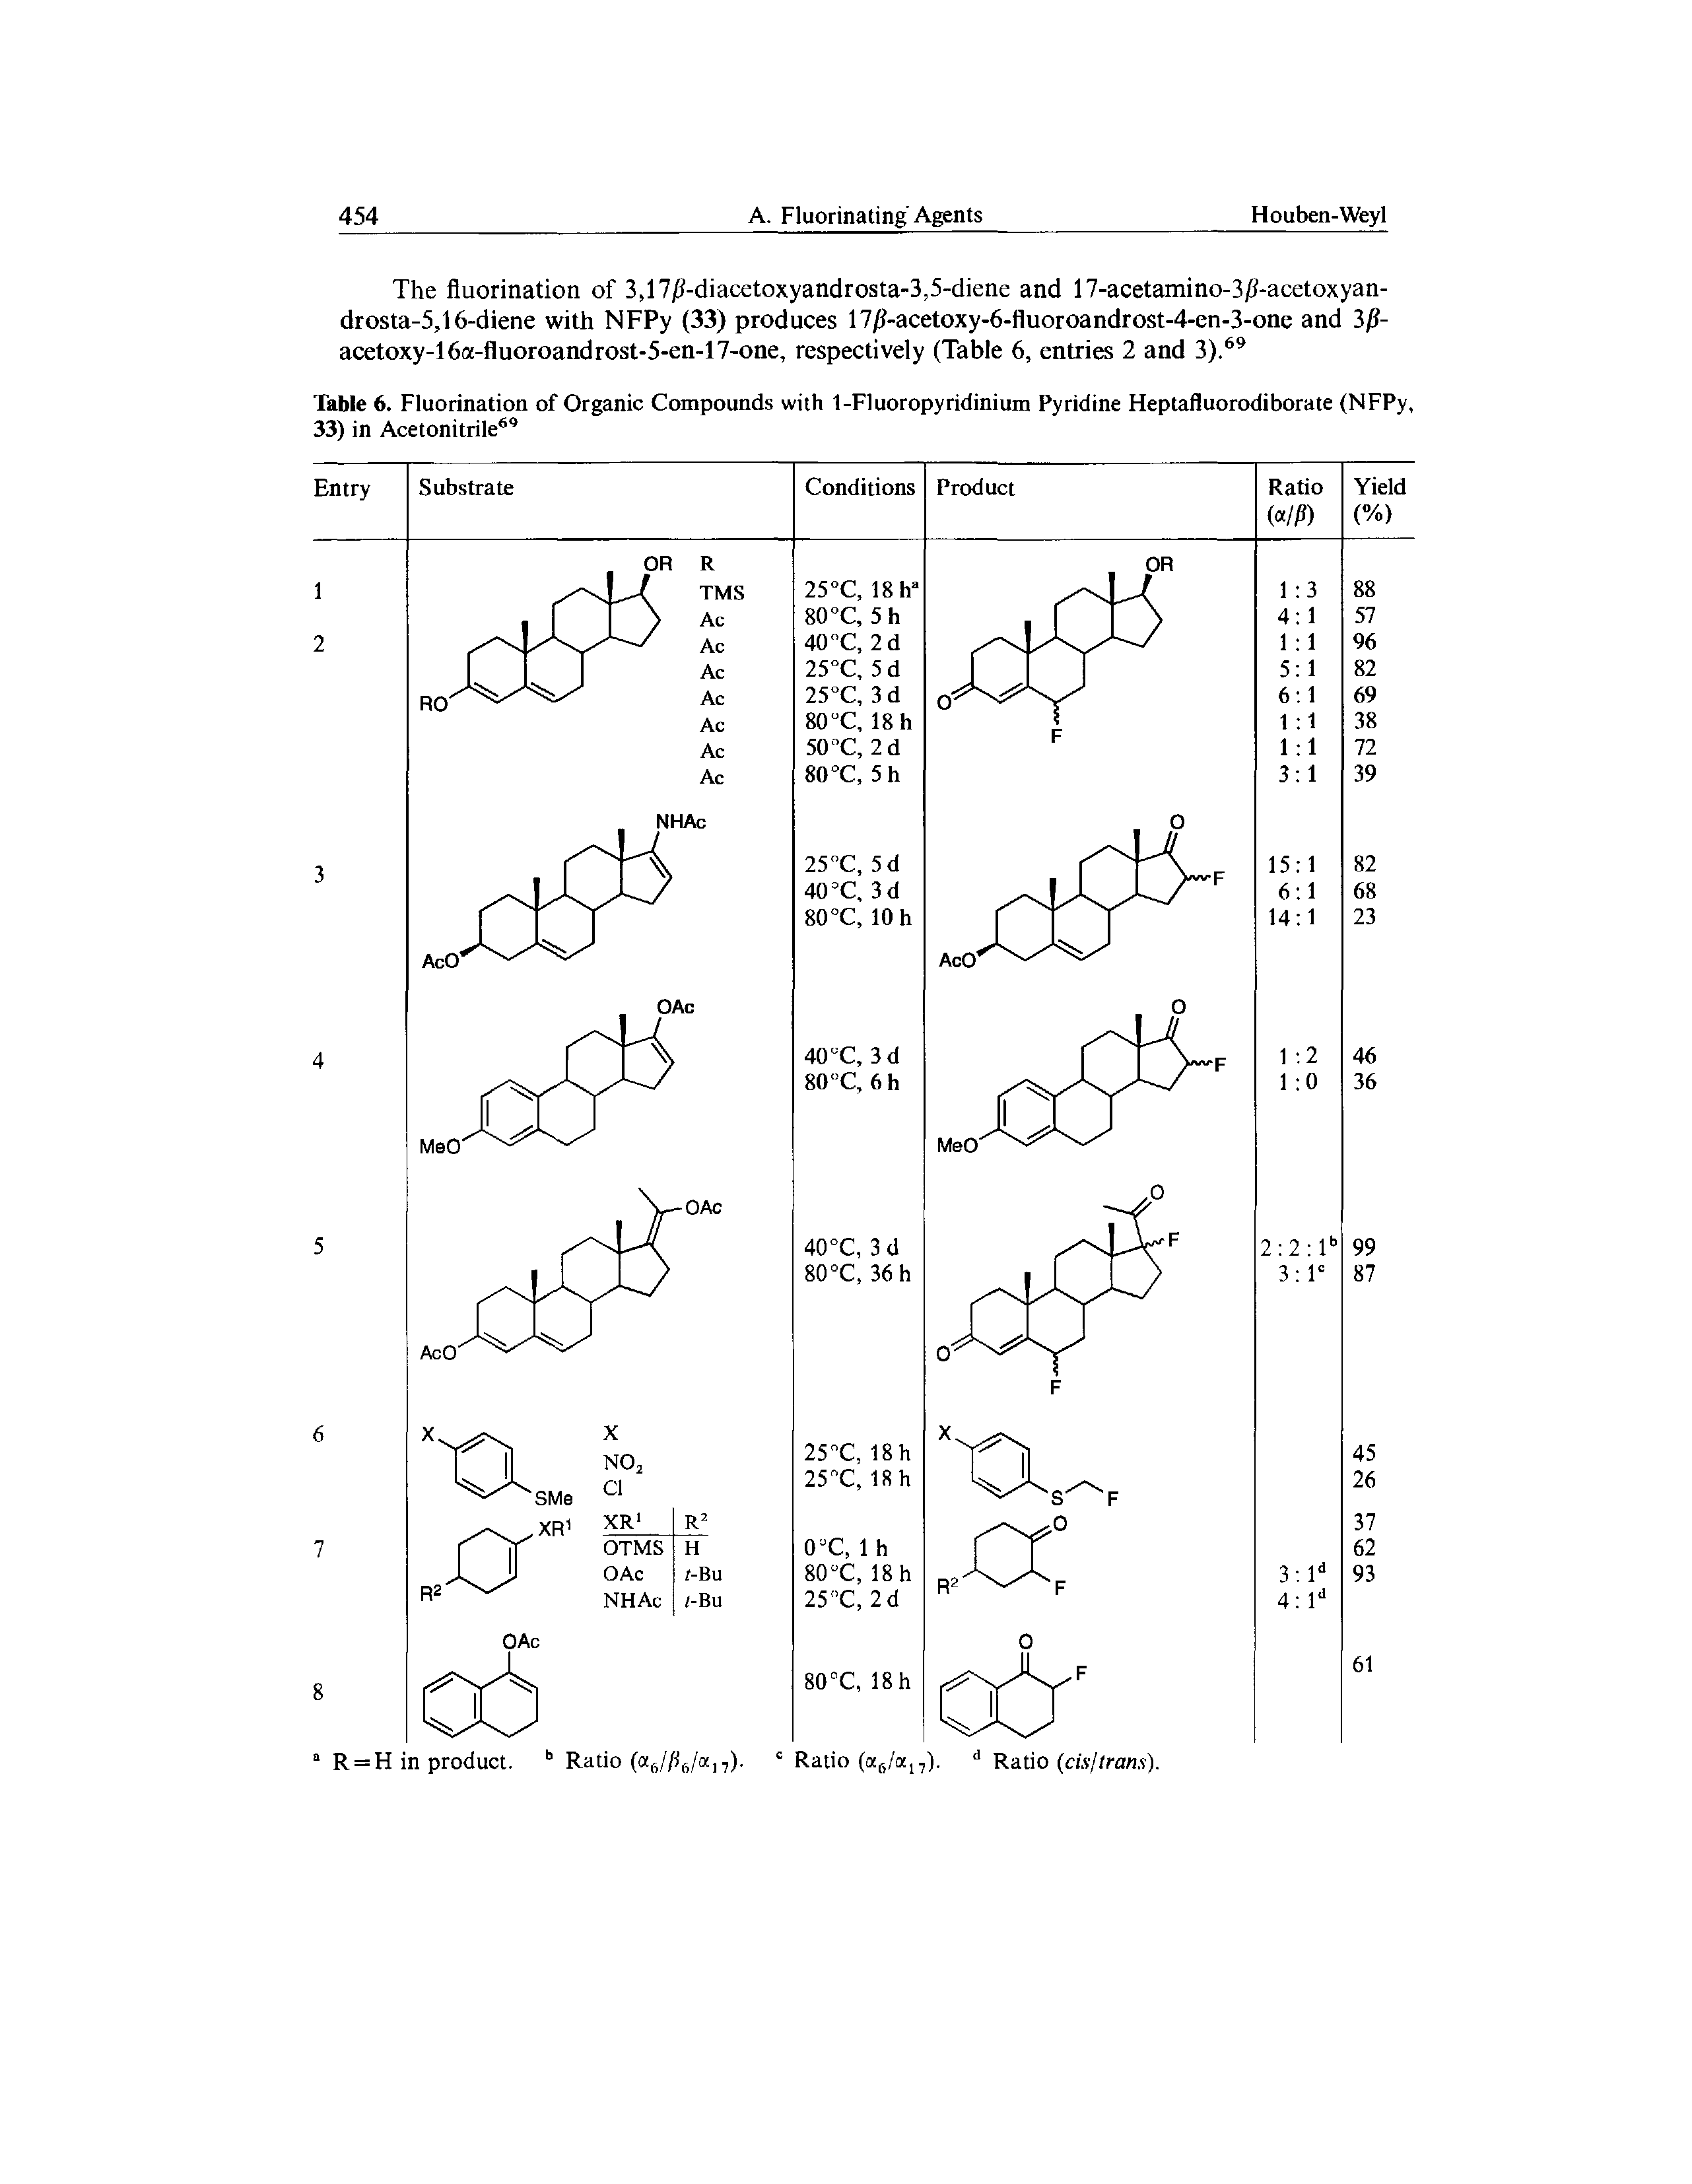 Table 6. Fluorination of Organic Compounds with 1-Fluoropyridinium Pyridine Heptafluorodiborate (NFPy, 33) in Acetonitrile69...